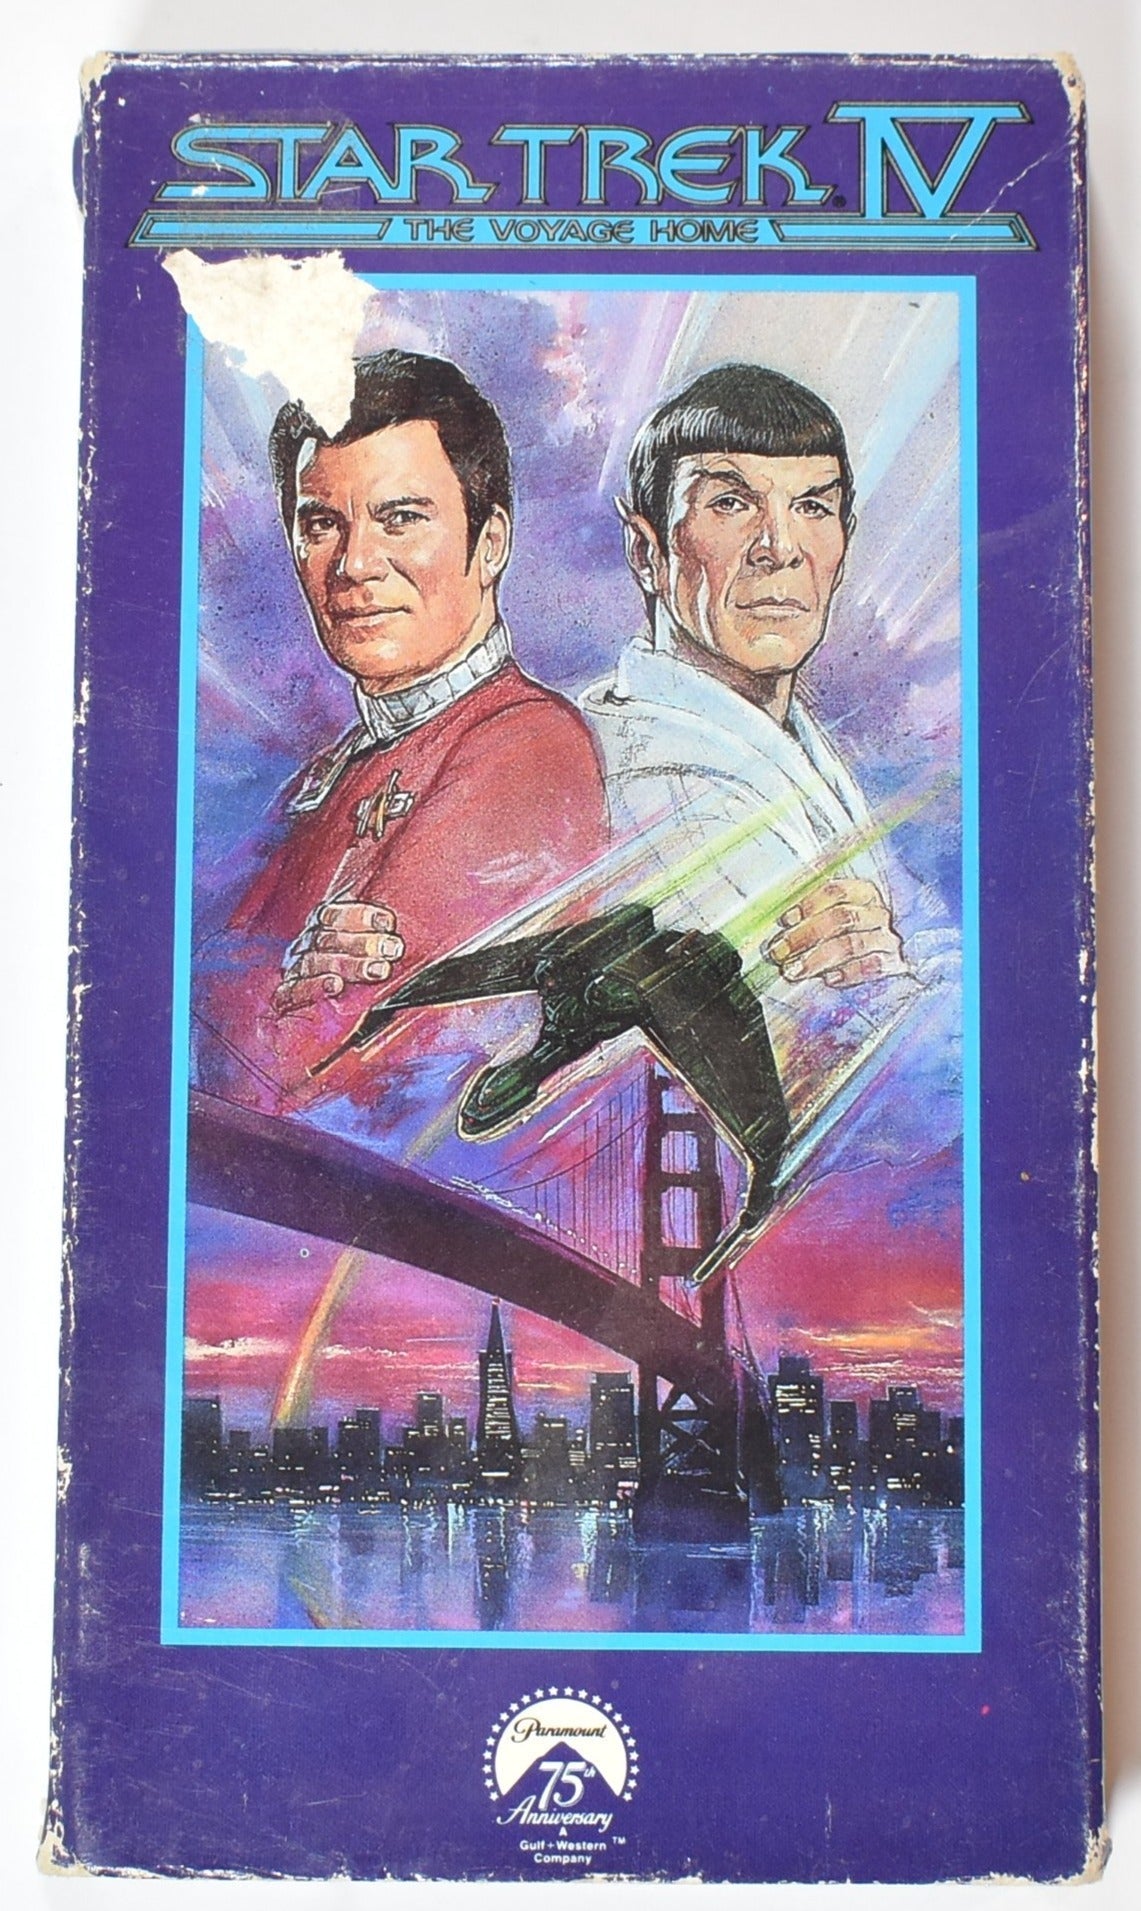 Star Trek IV The Voyage Home VHS Tape Movie used Paramount Films